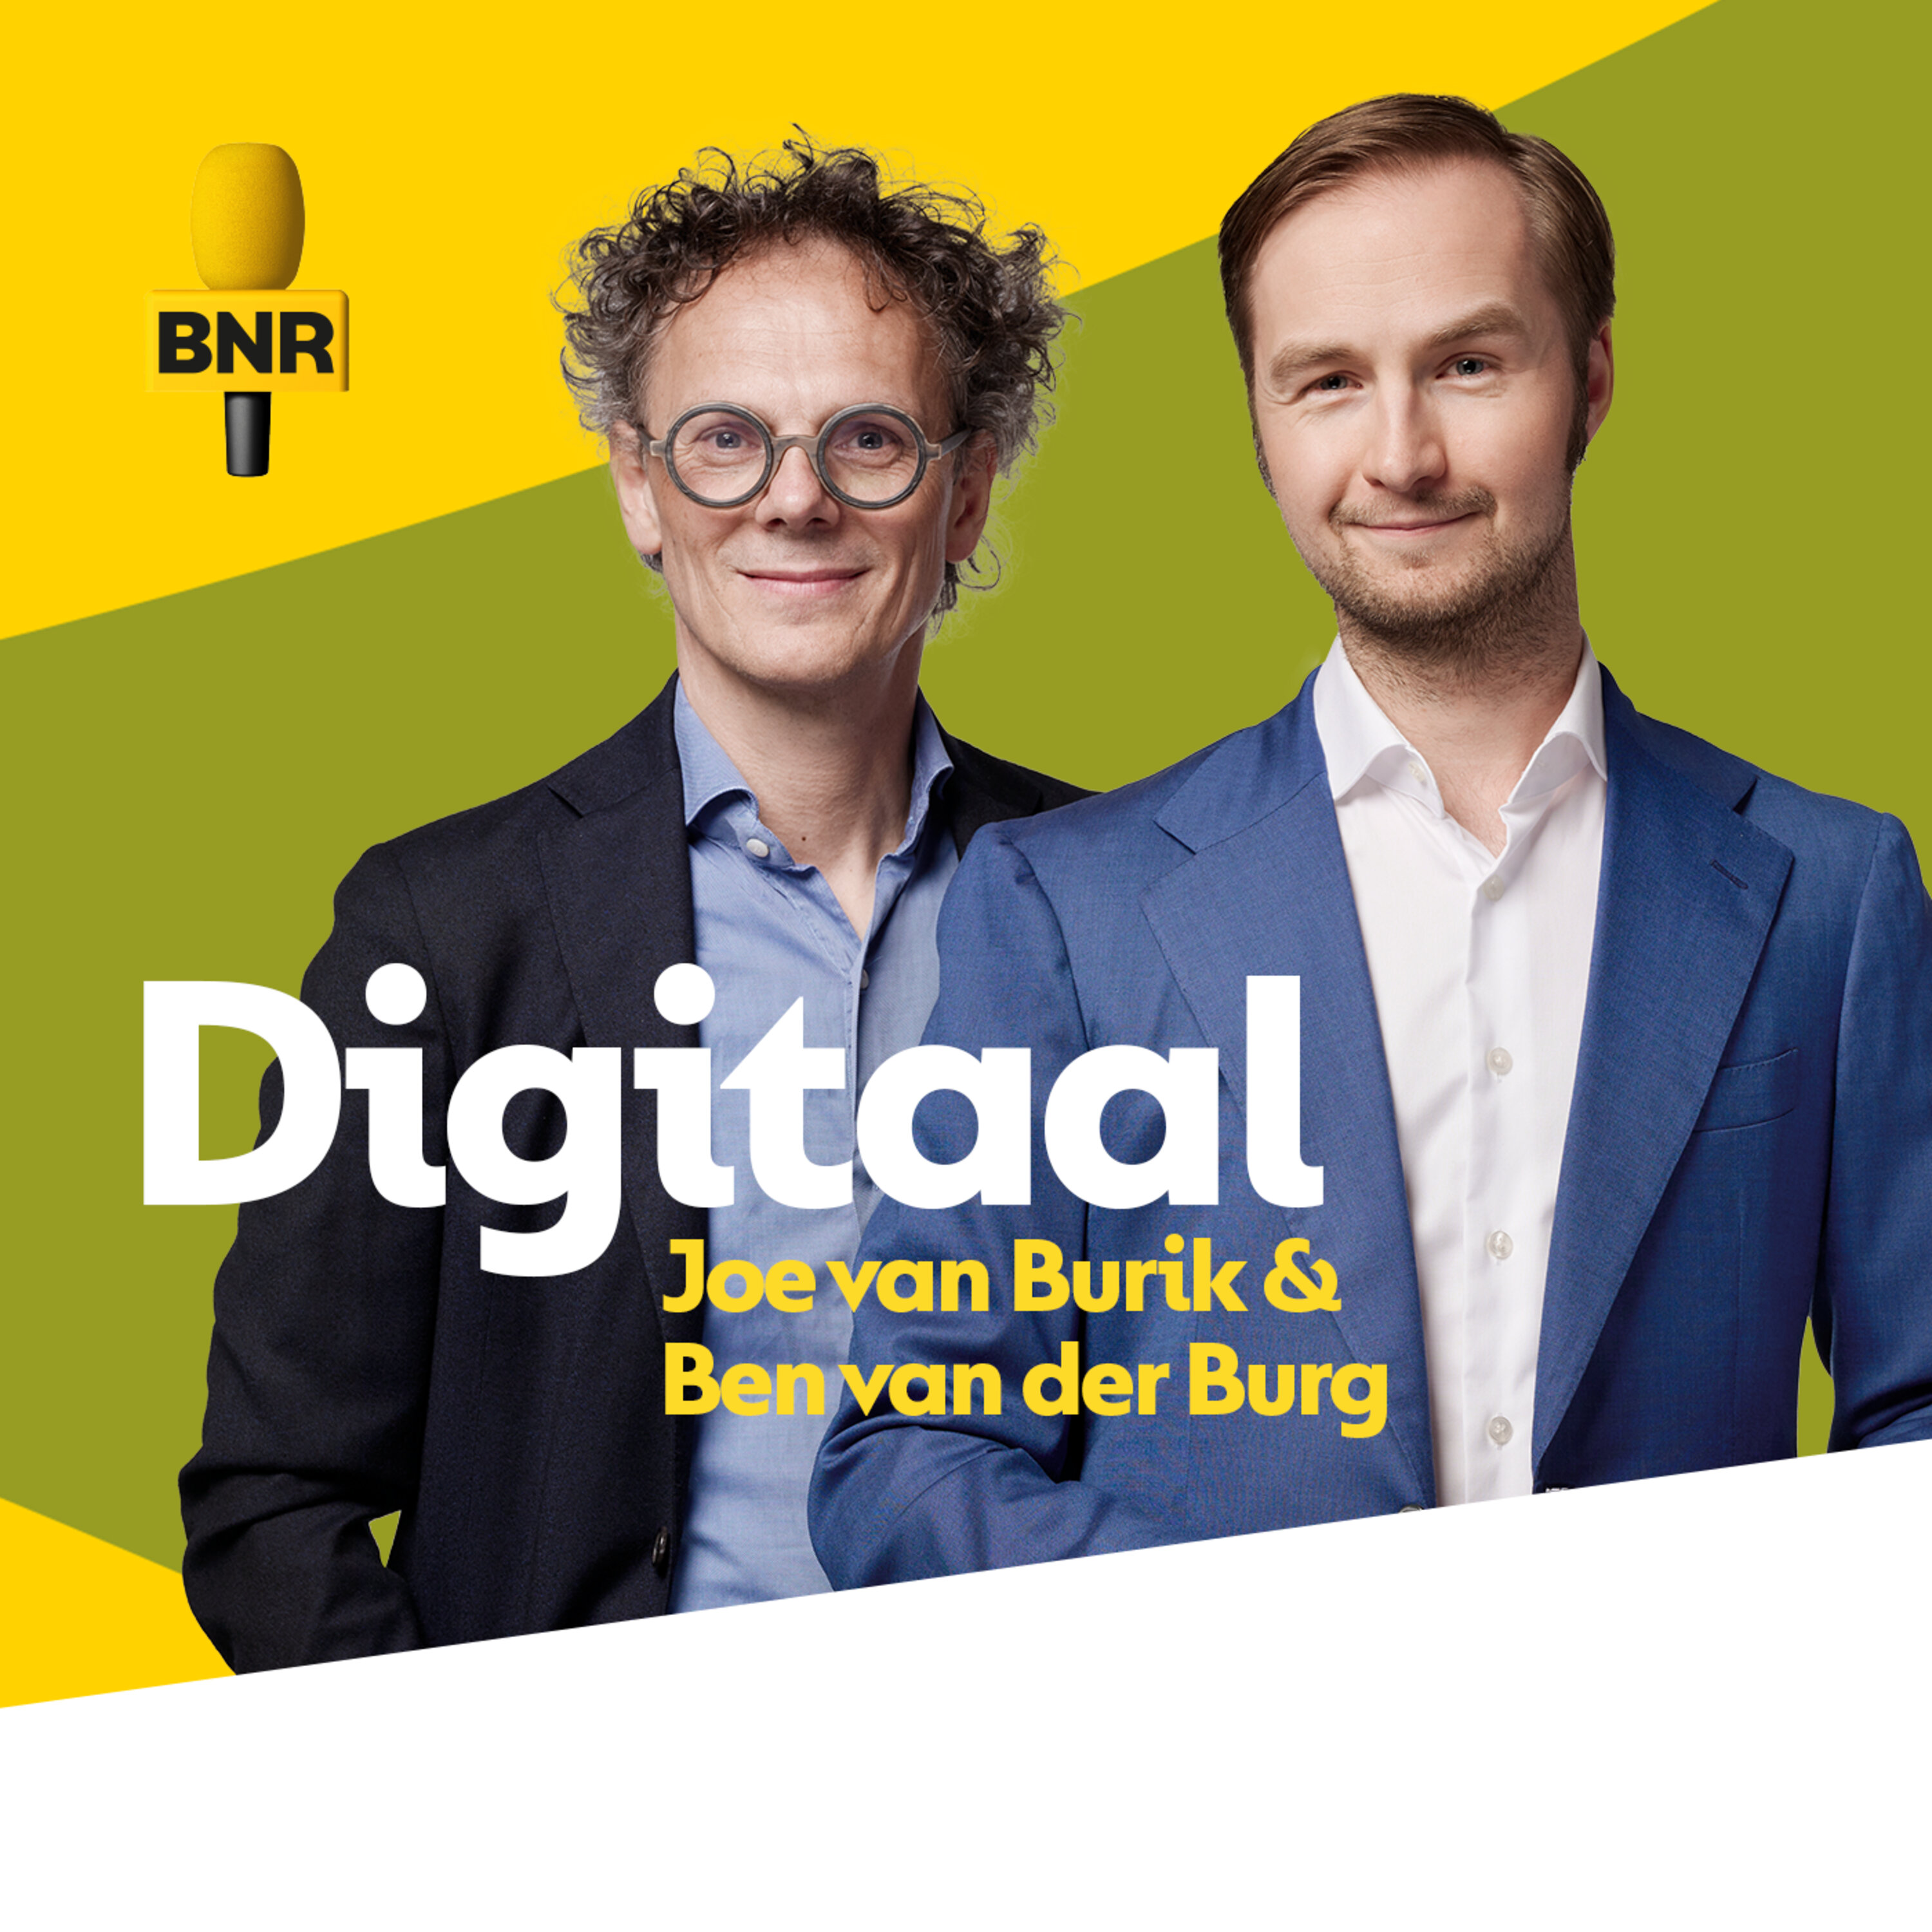 Digitaal | BNR:BNR Nieuwsradio